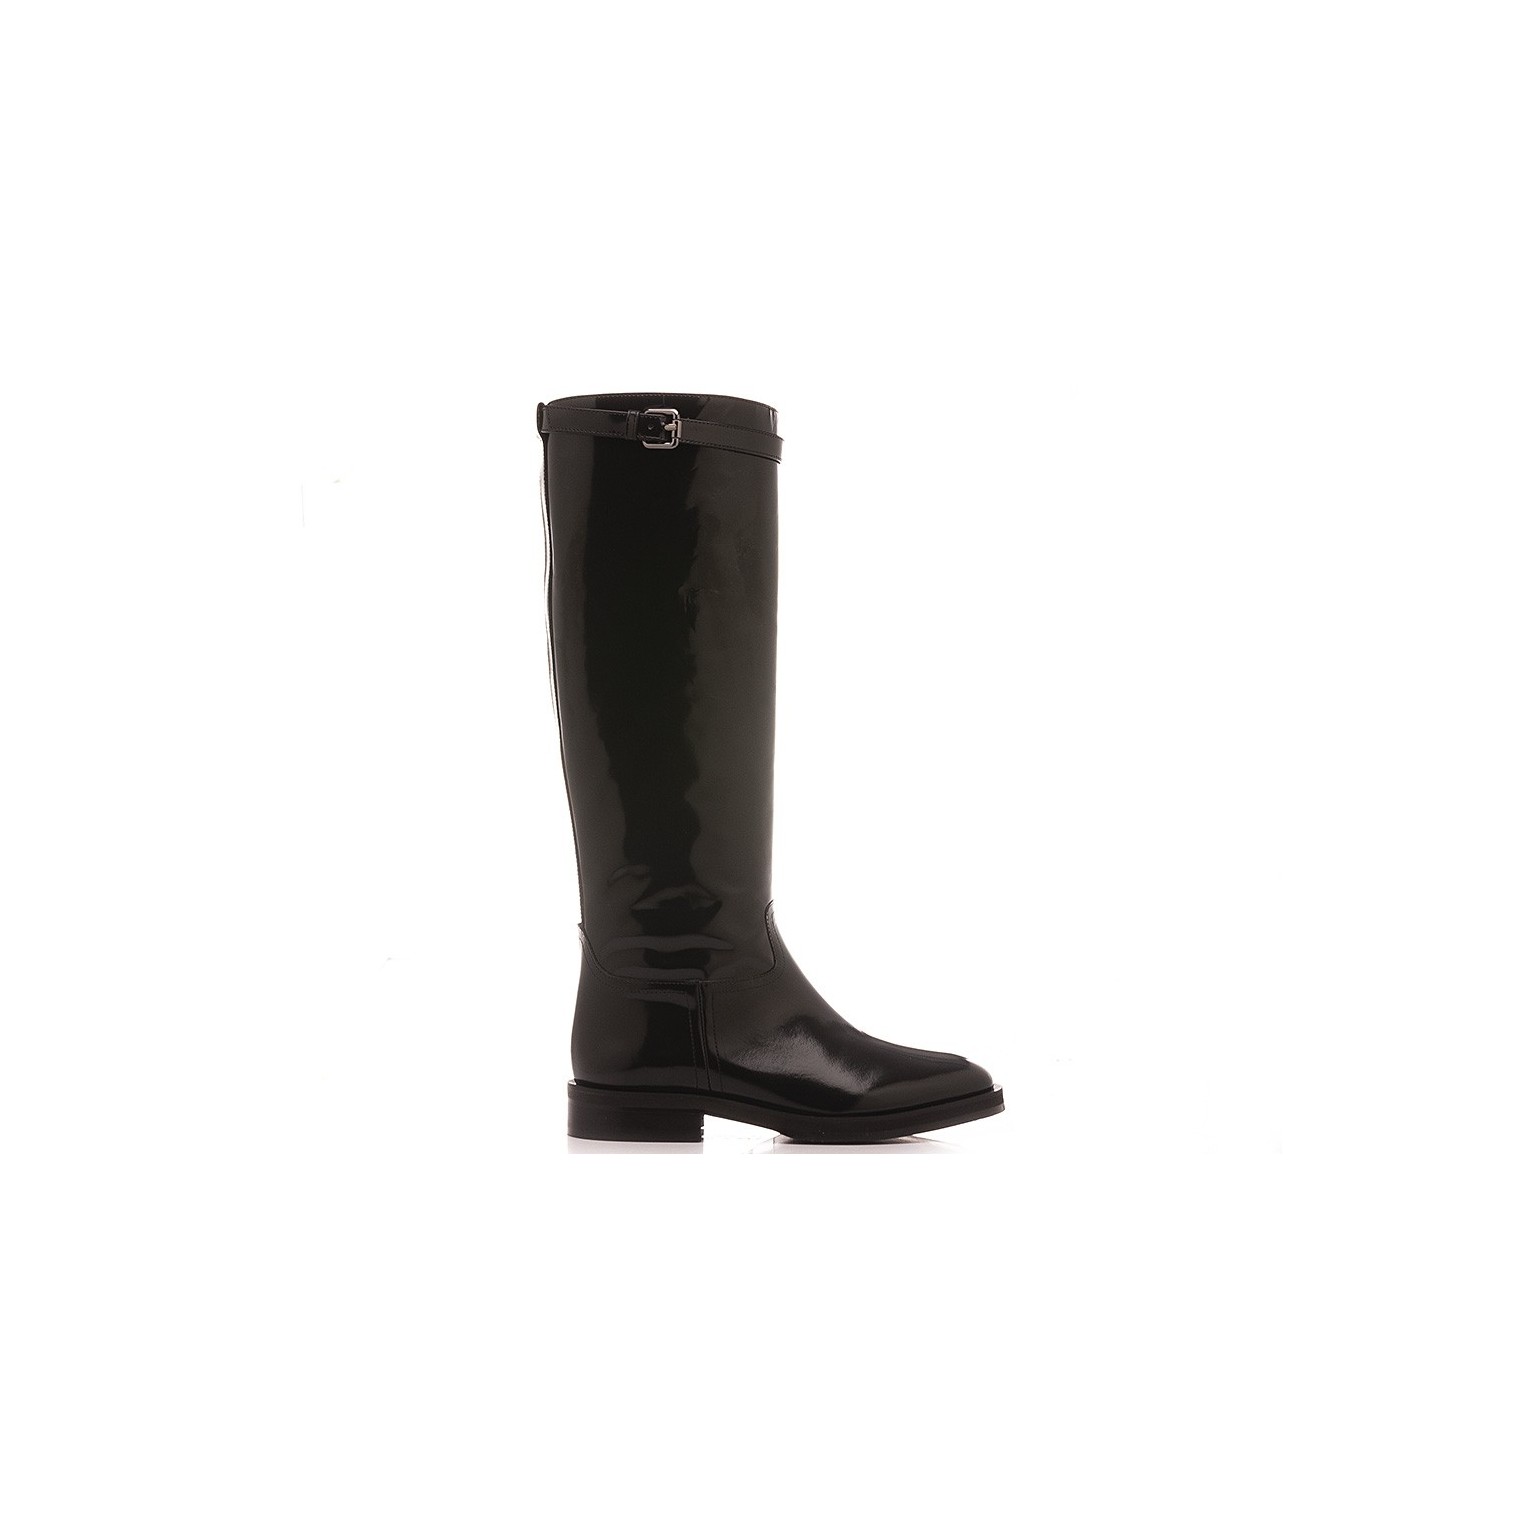 Angelo Bervicato Women's Boots Leather Black B4258